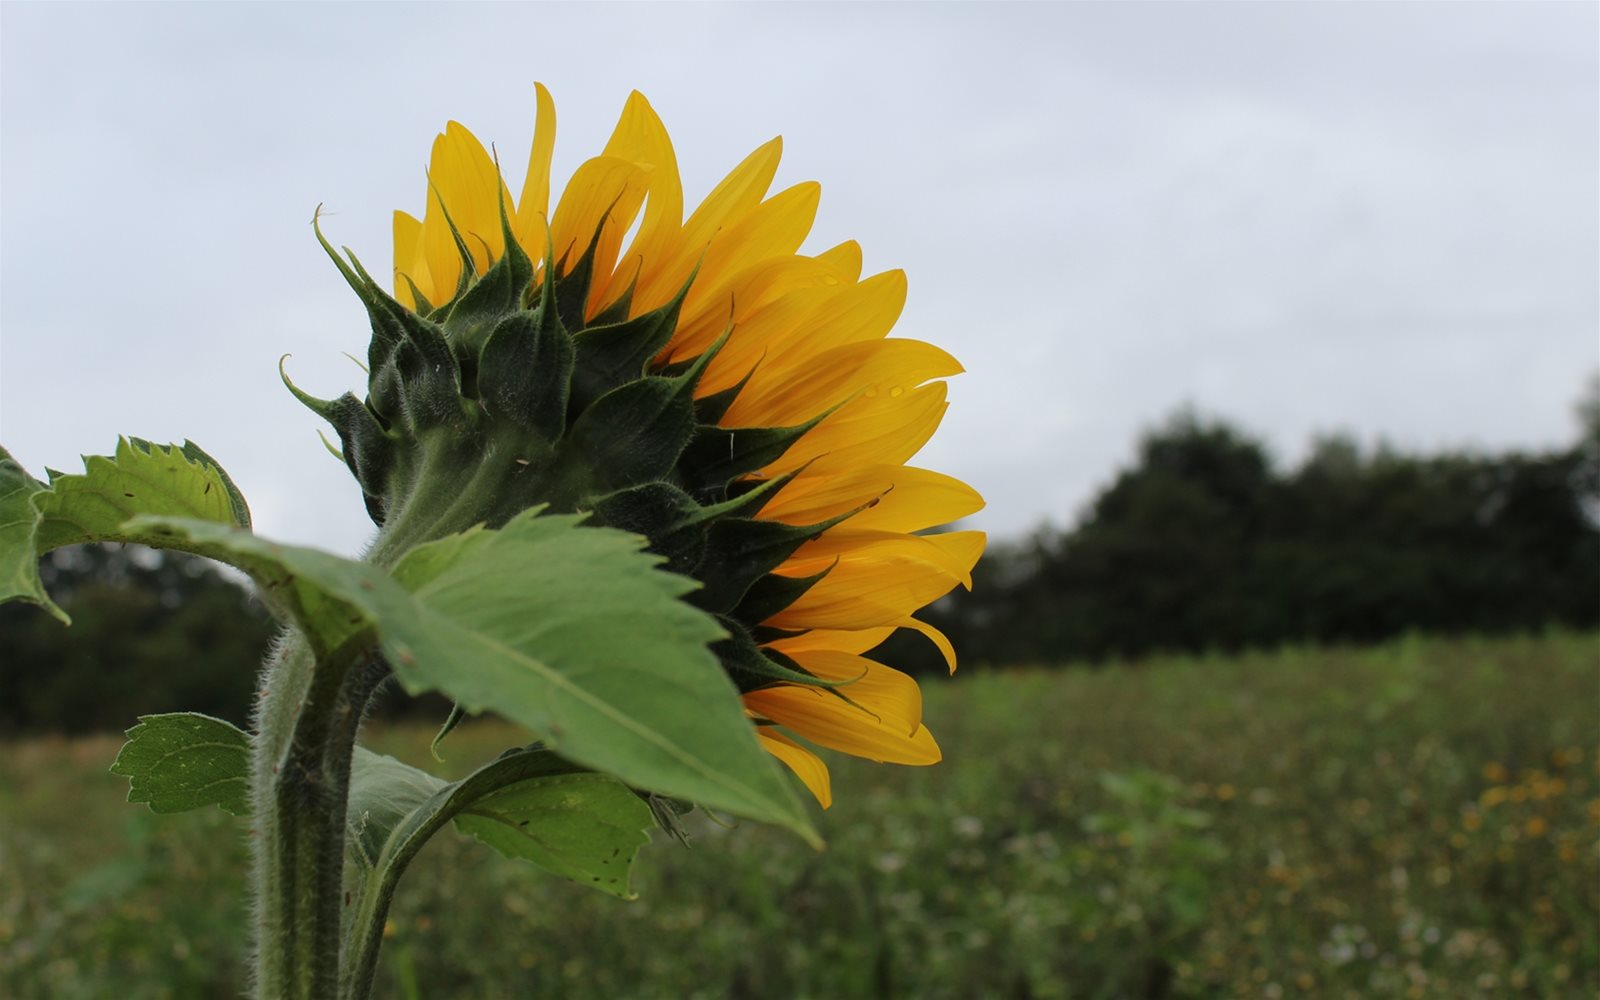 Sunflower turning to the sun